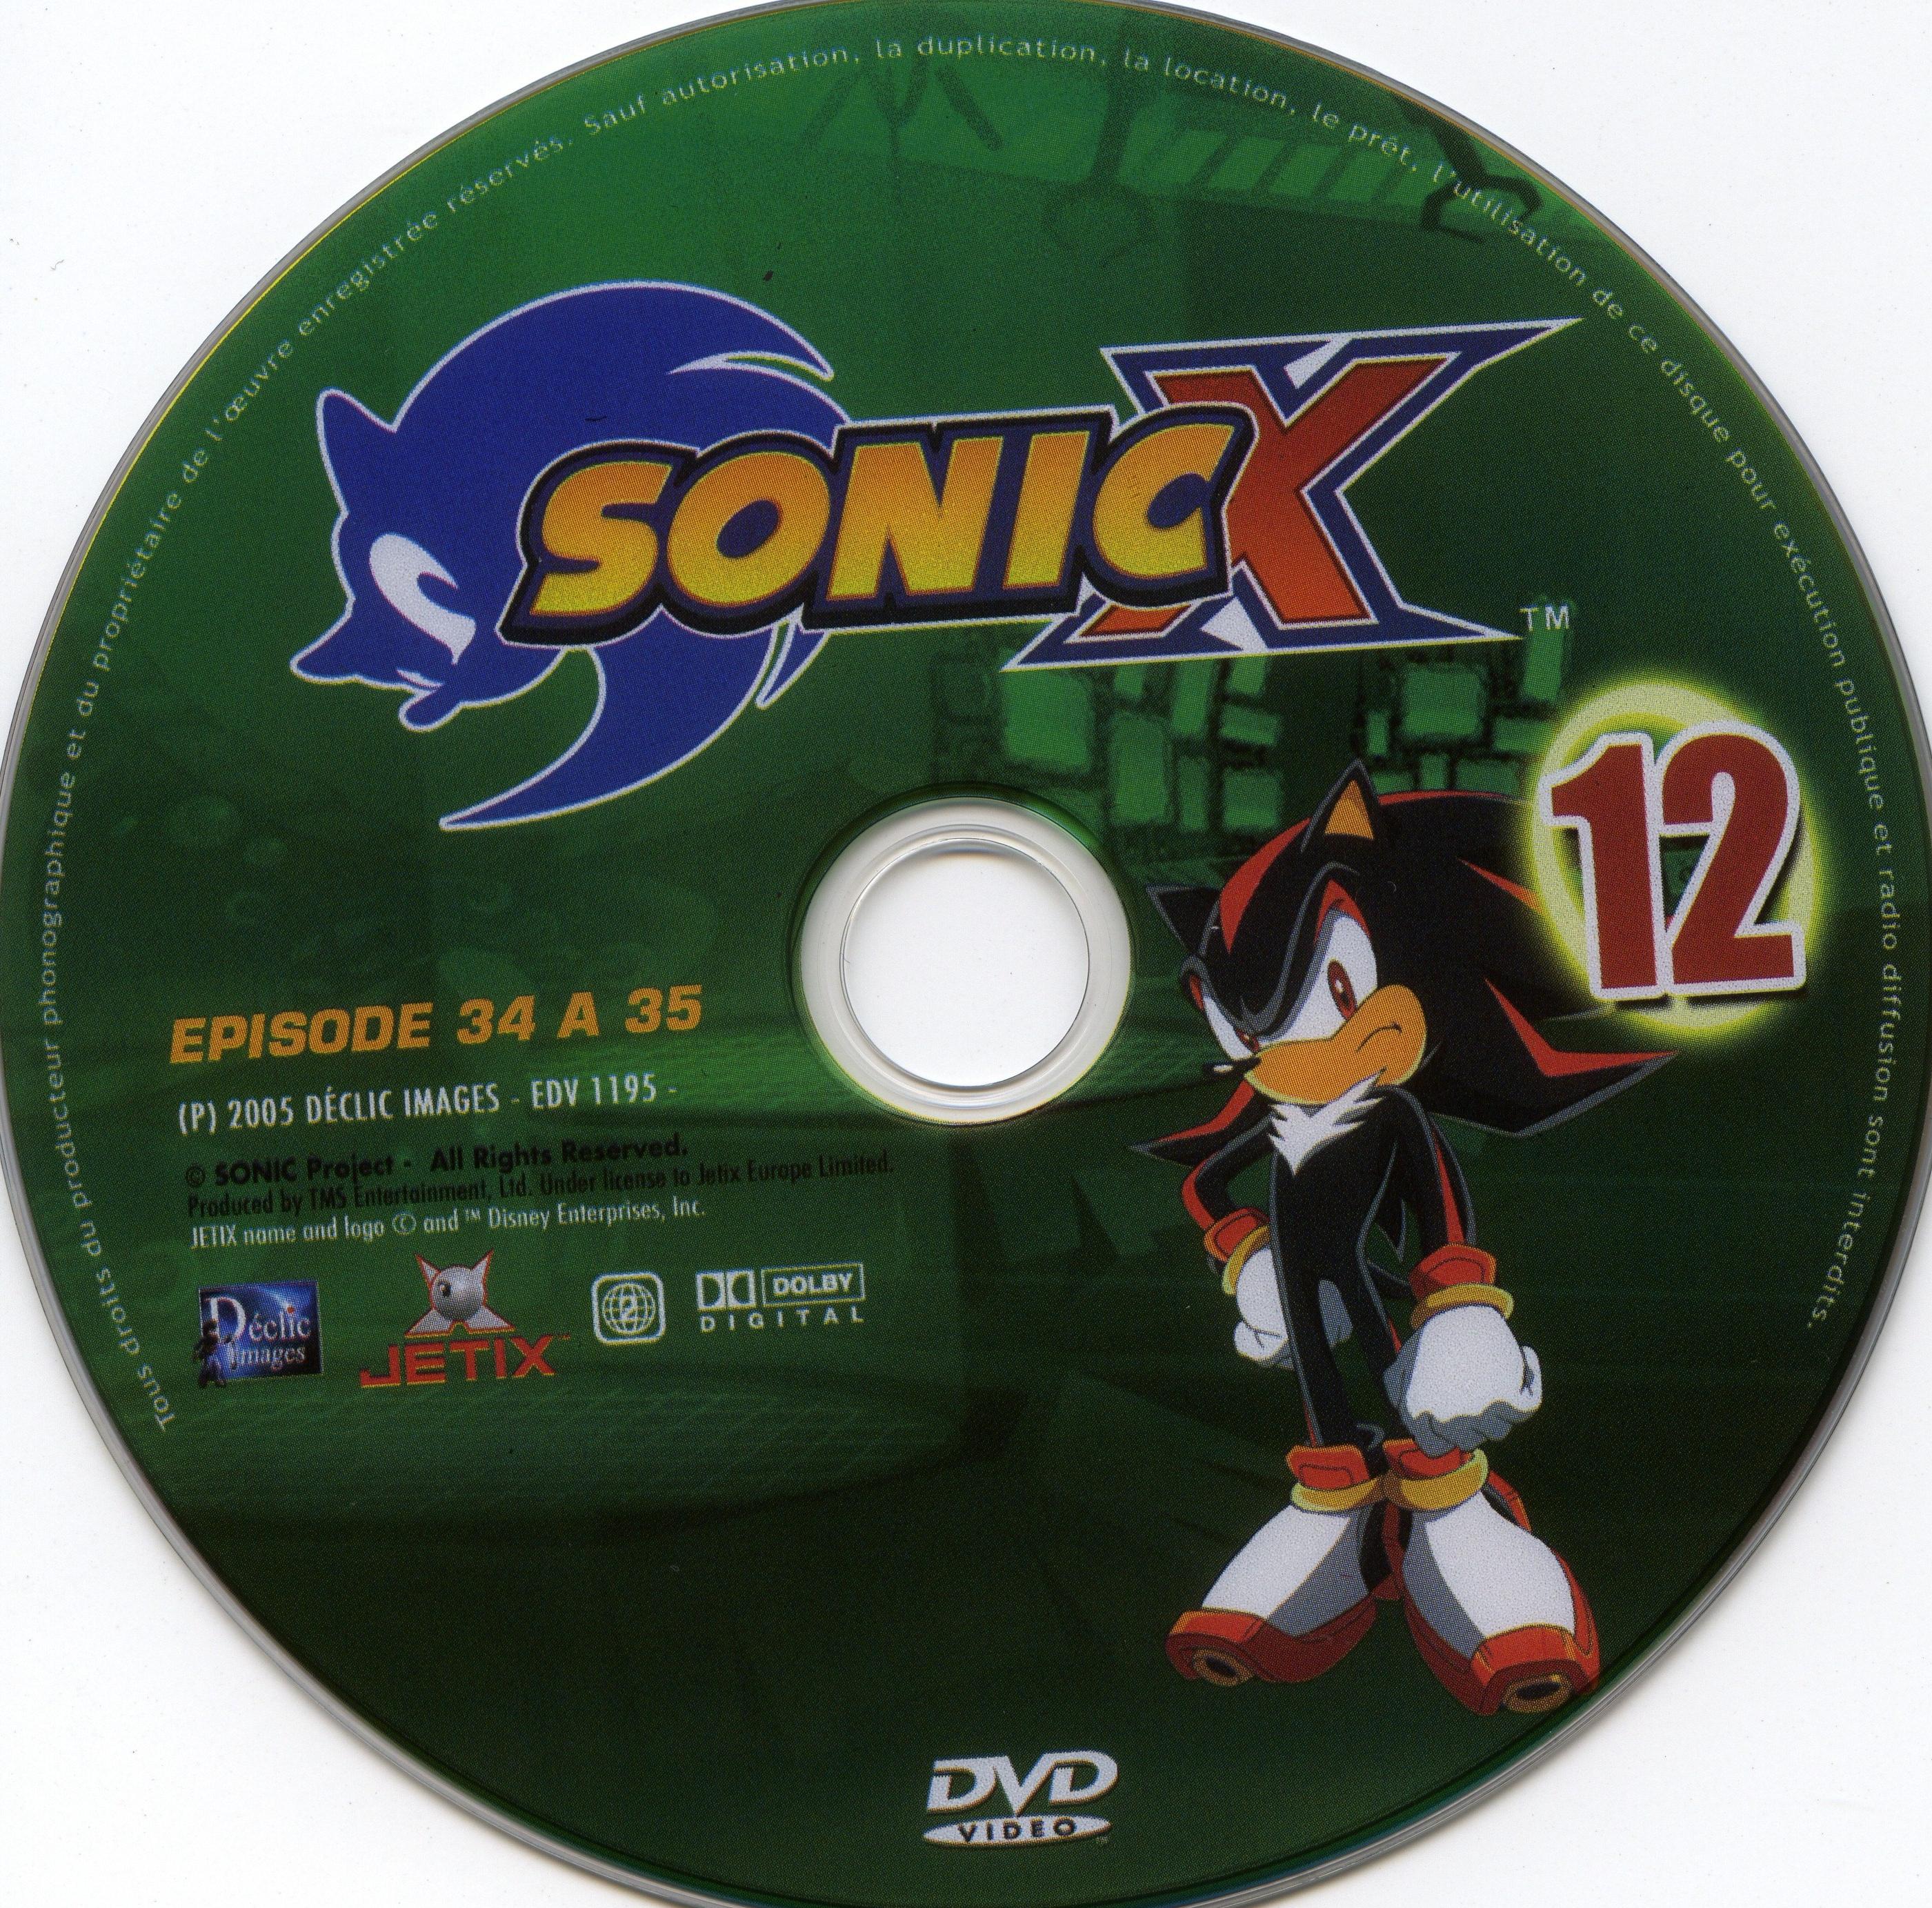 Sonic X vol 12